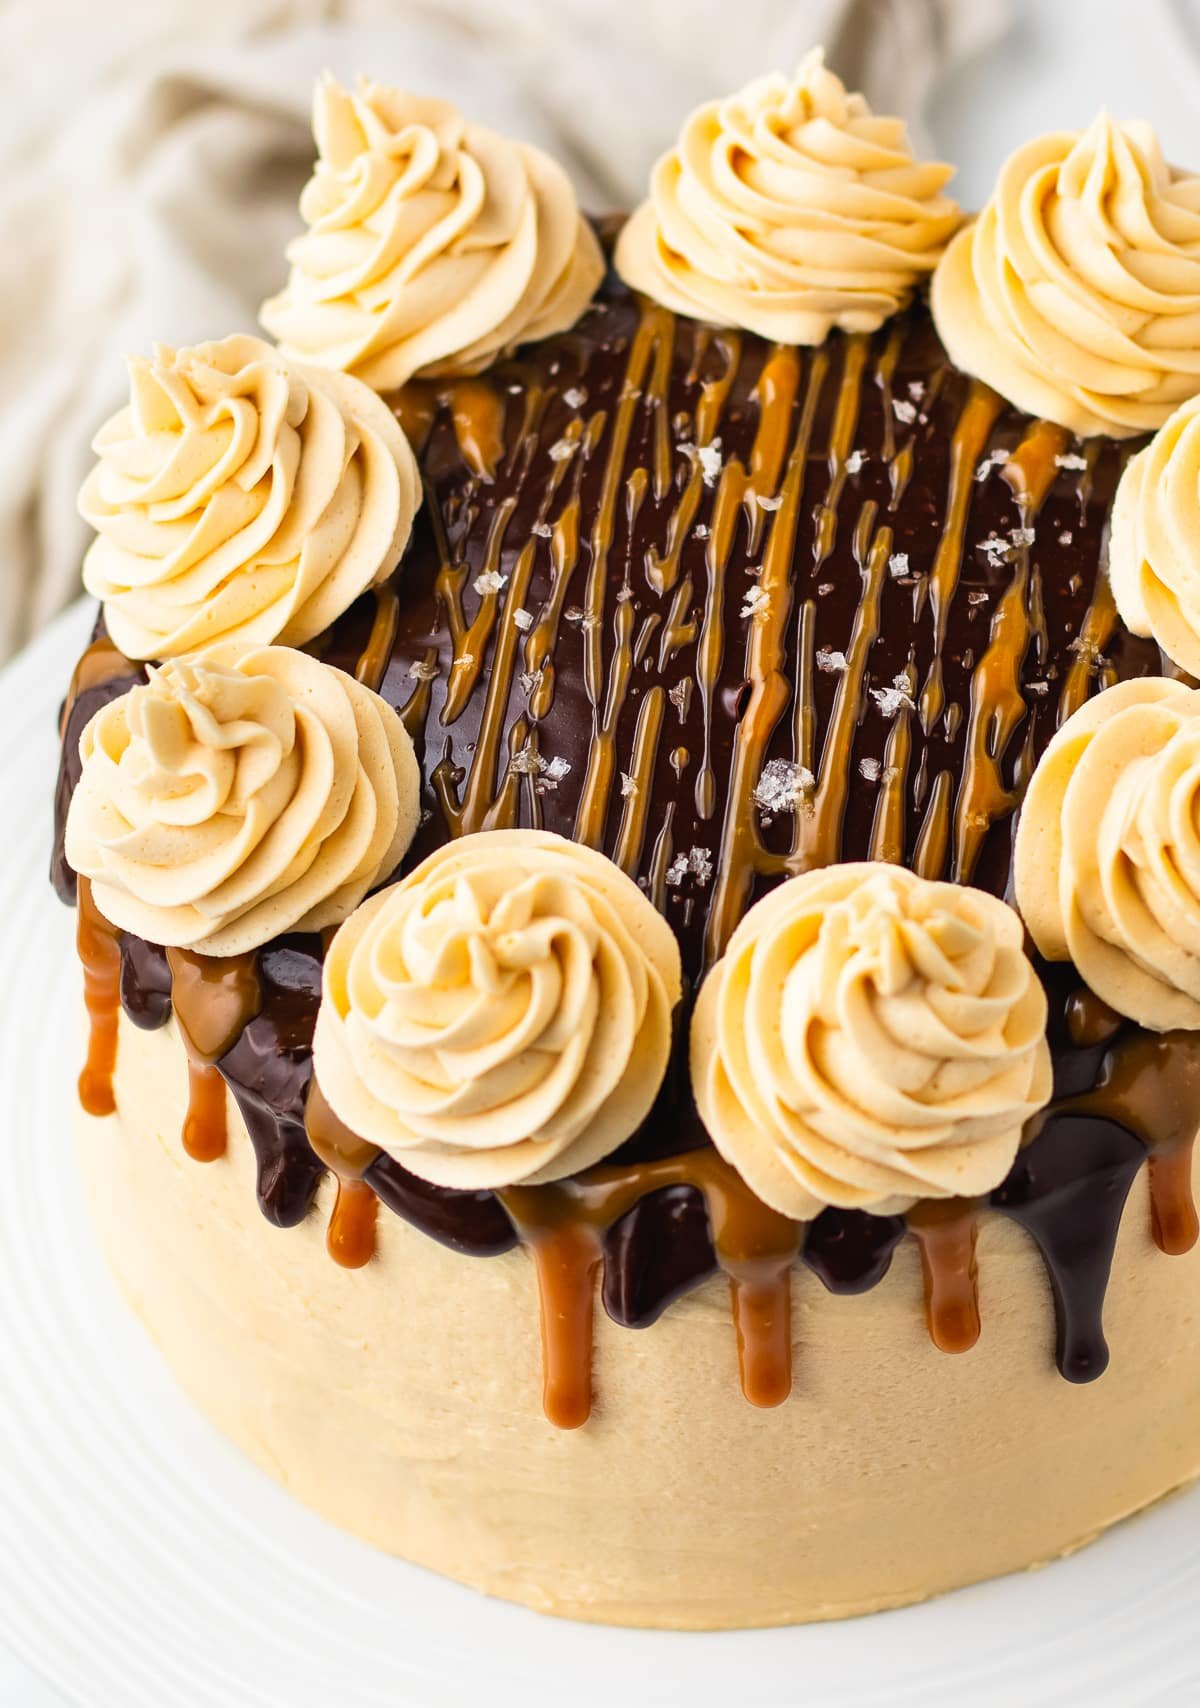 up close image of chocolate caramel cake on a cake stand